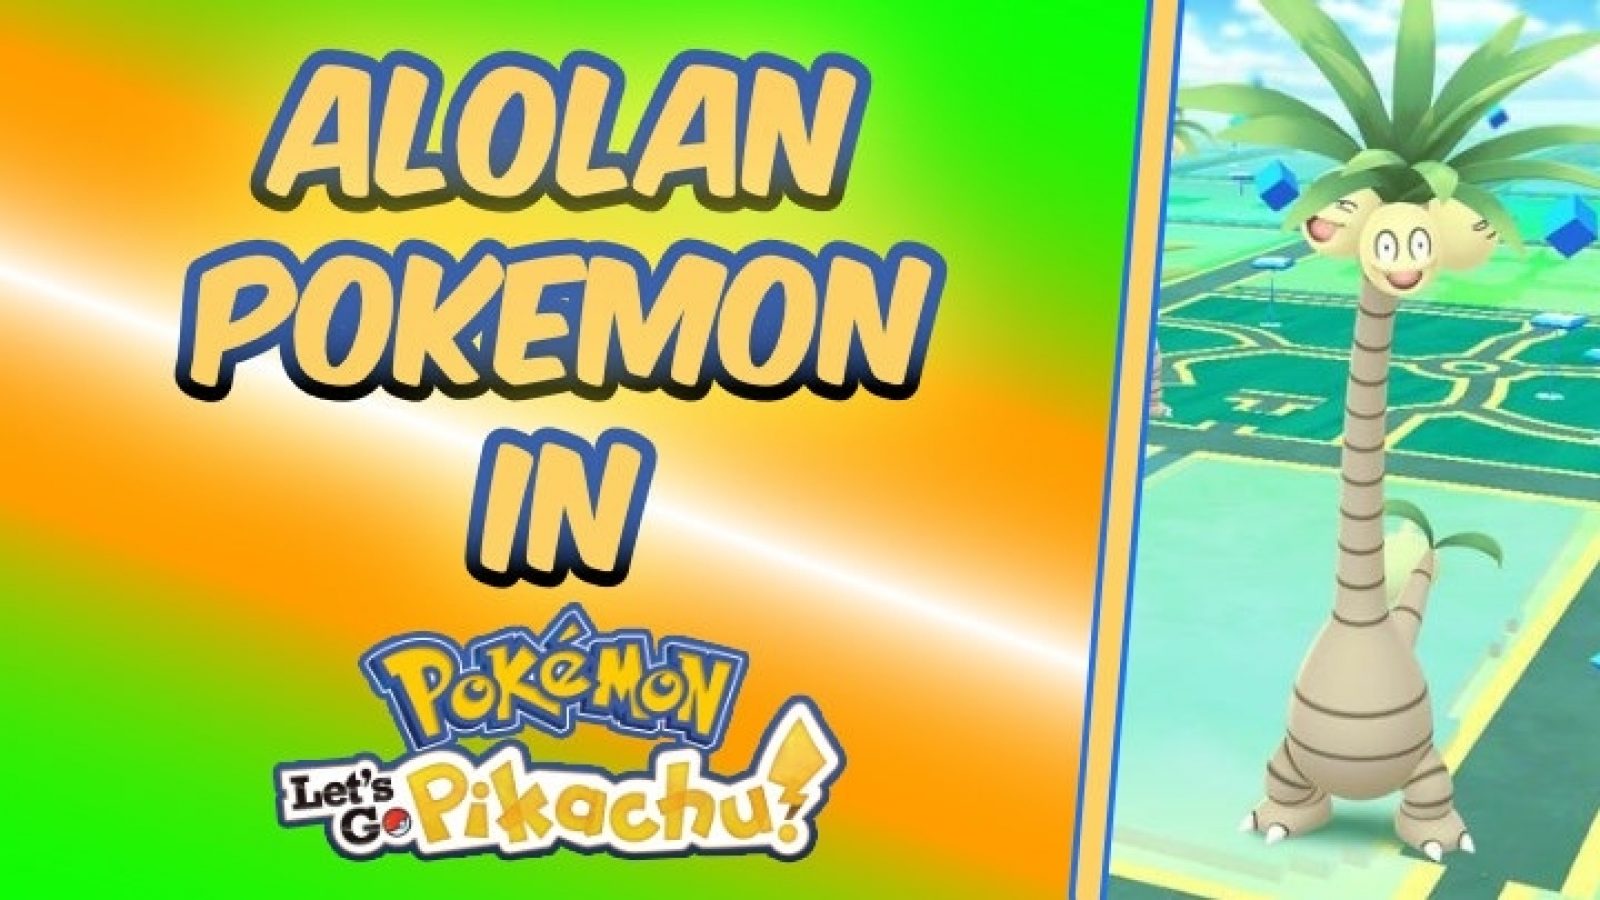 Pokemon Let's Go, Alolan Pokemon - Information, List, And How To Get